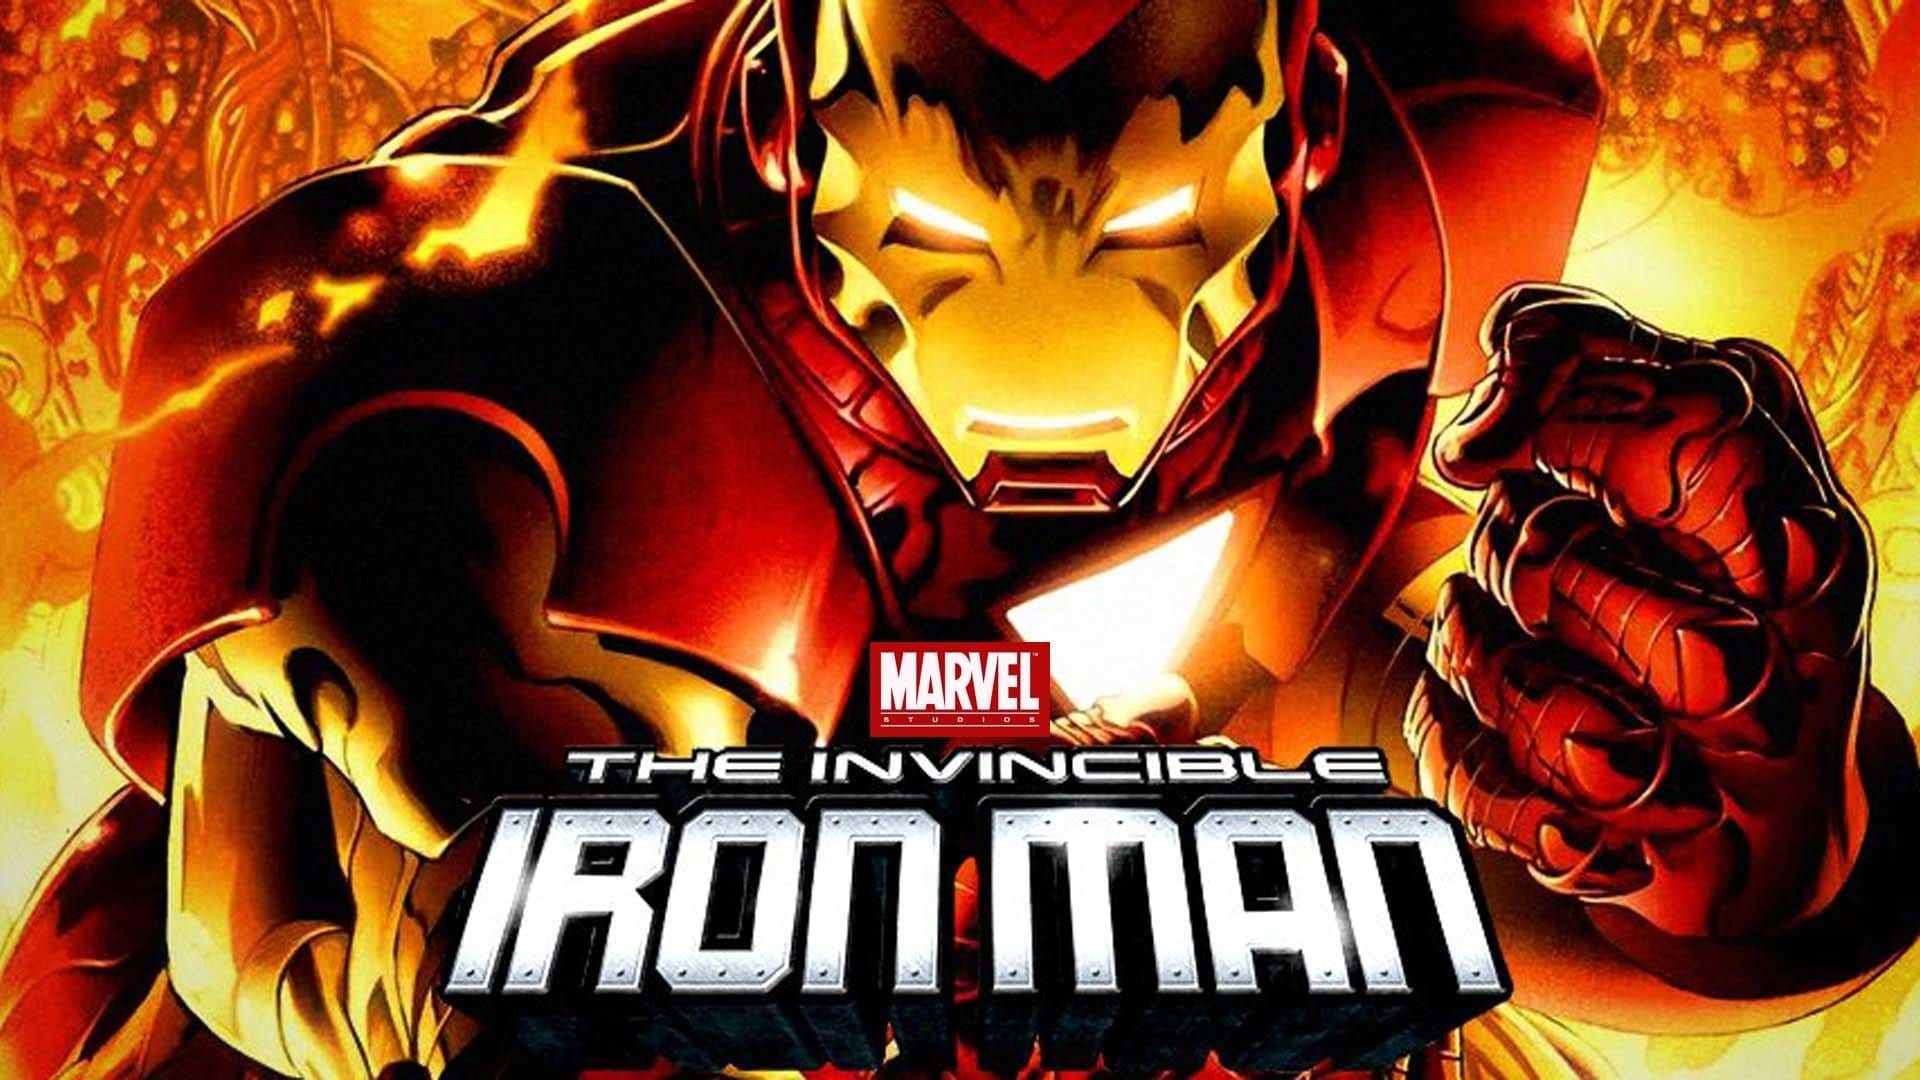 Iron man full movie 123movies free